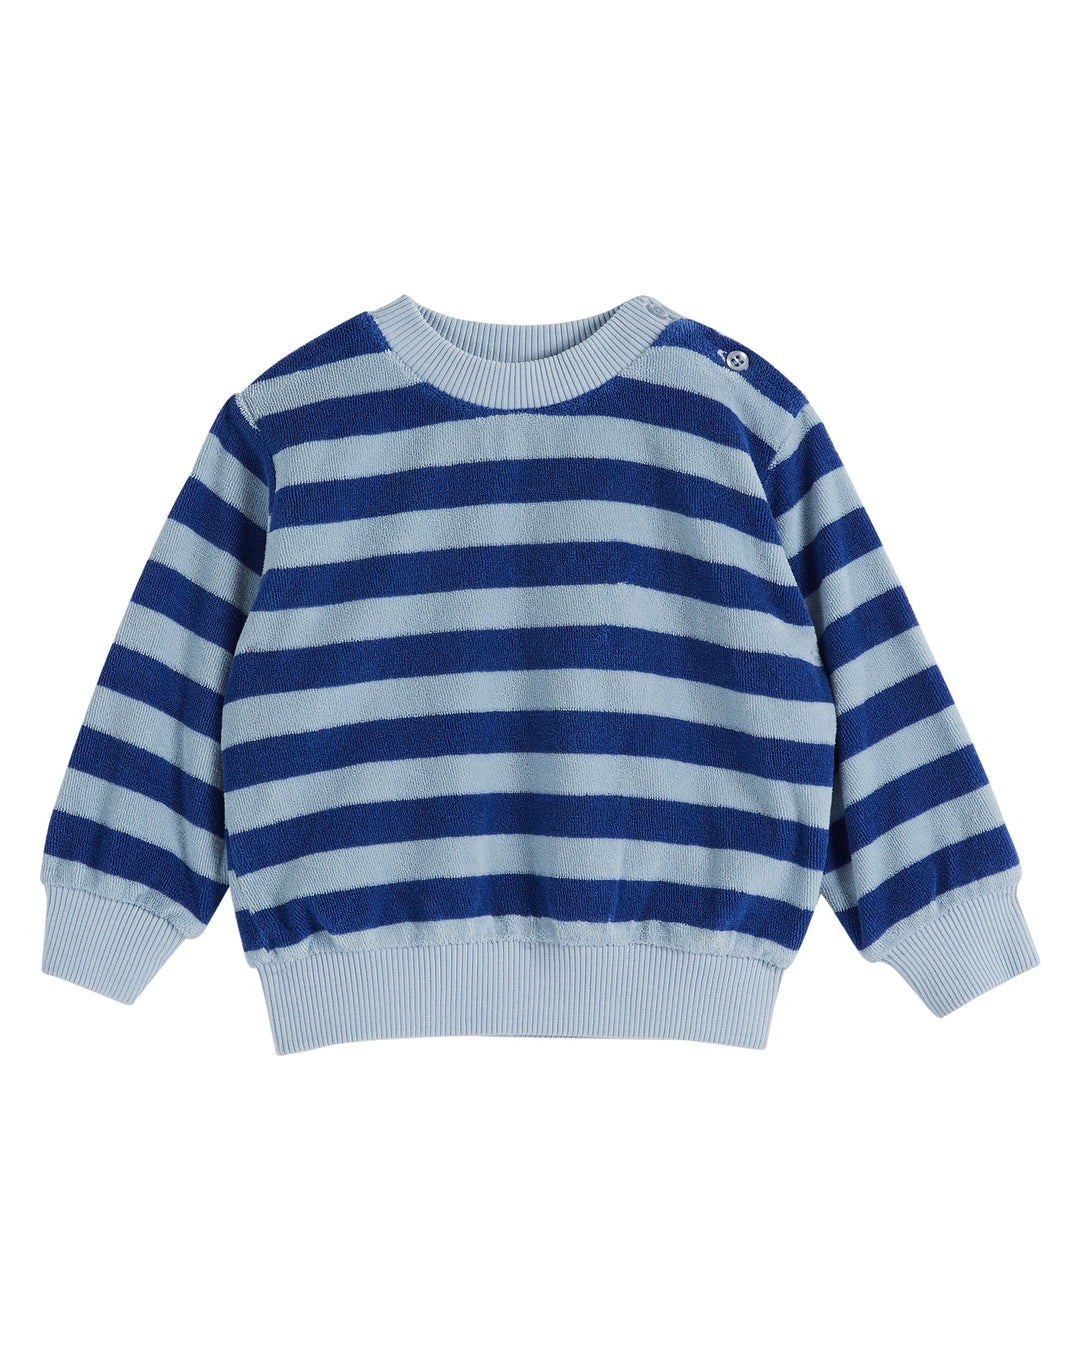 Sweater Baby Printed Terry Rayures Celeste